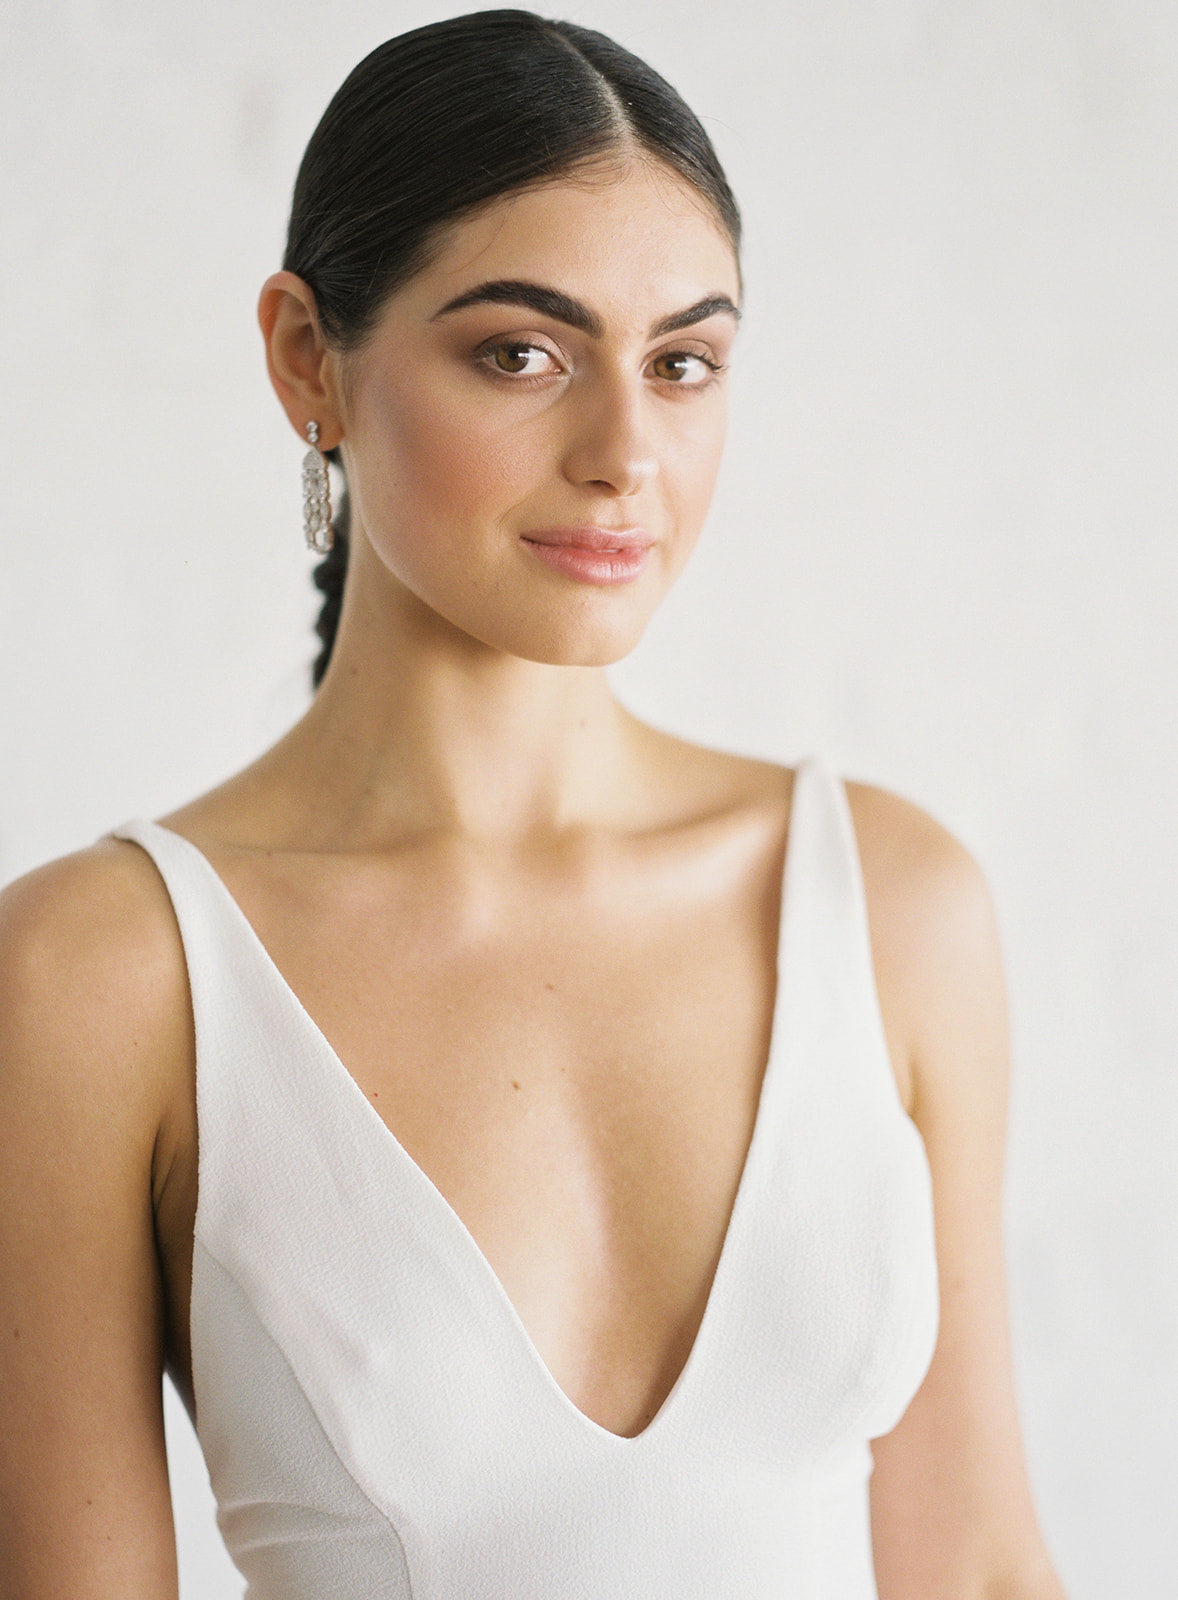 Claire by Samantha Wynne | Simple, Minimalist Wedding Dress with Plunge Neckline and Front Split